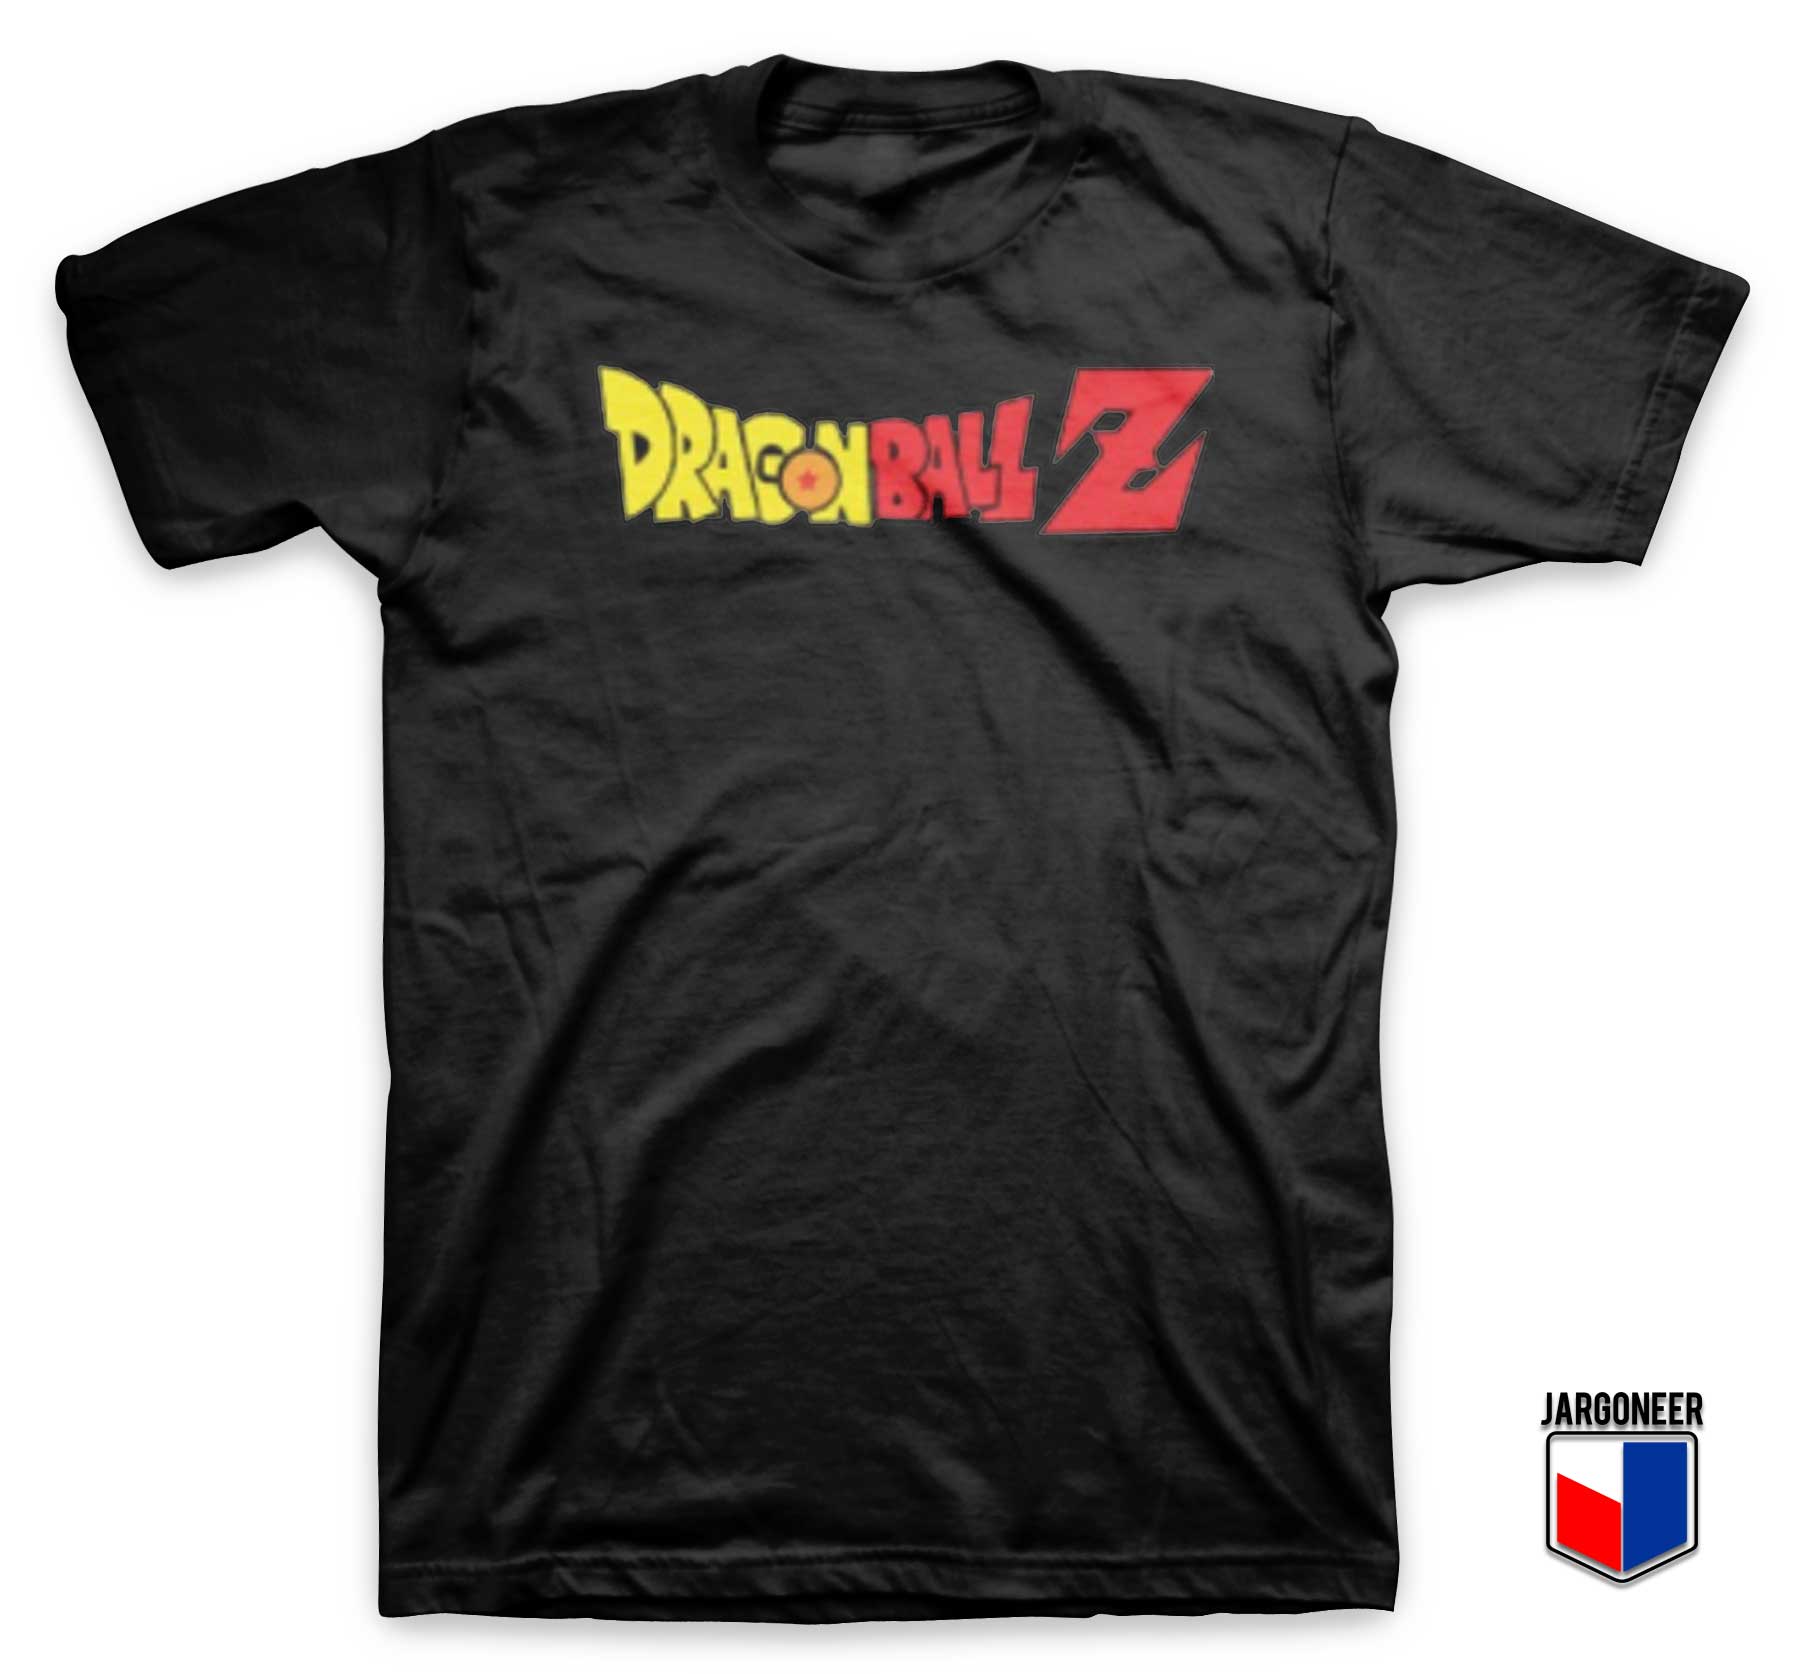 DragonBall Z Logo T Shirt - Shop Unique Graphic Cool Shirt Designs